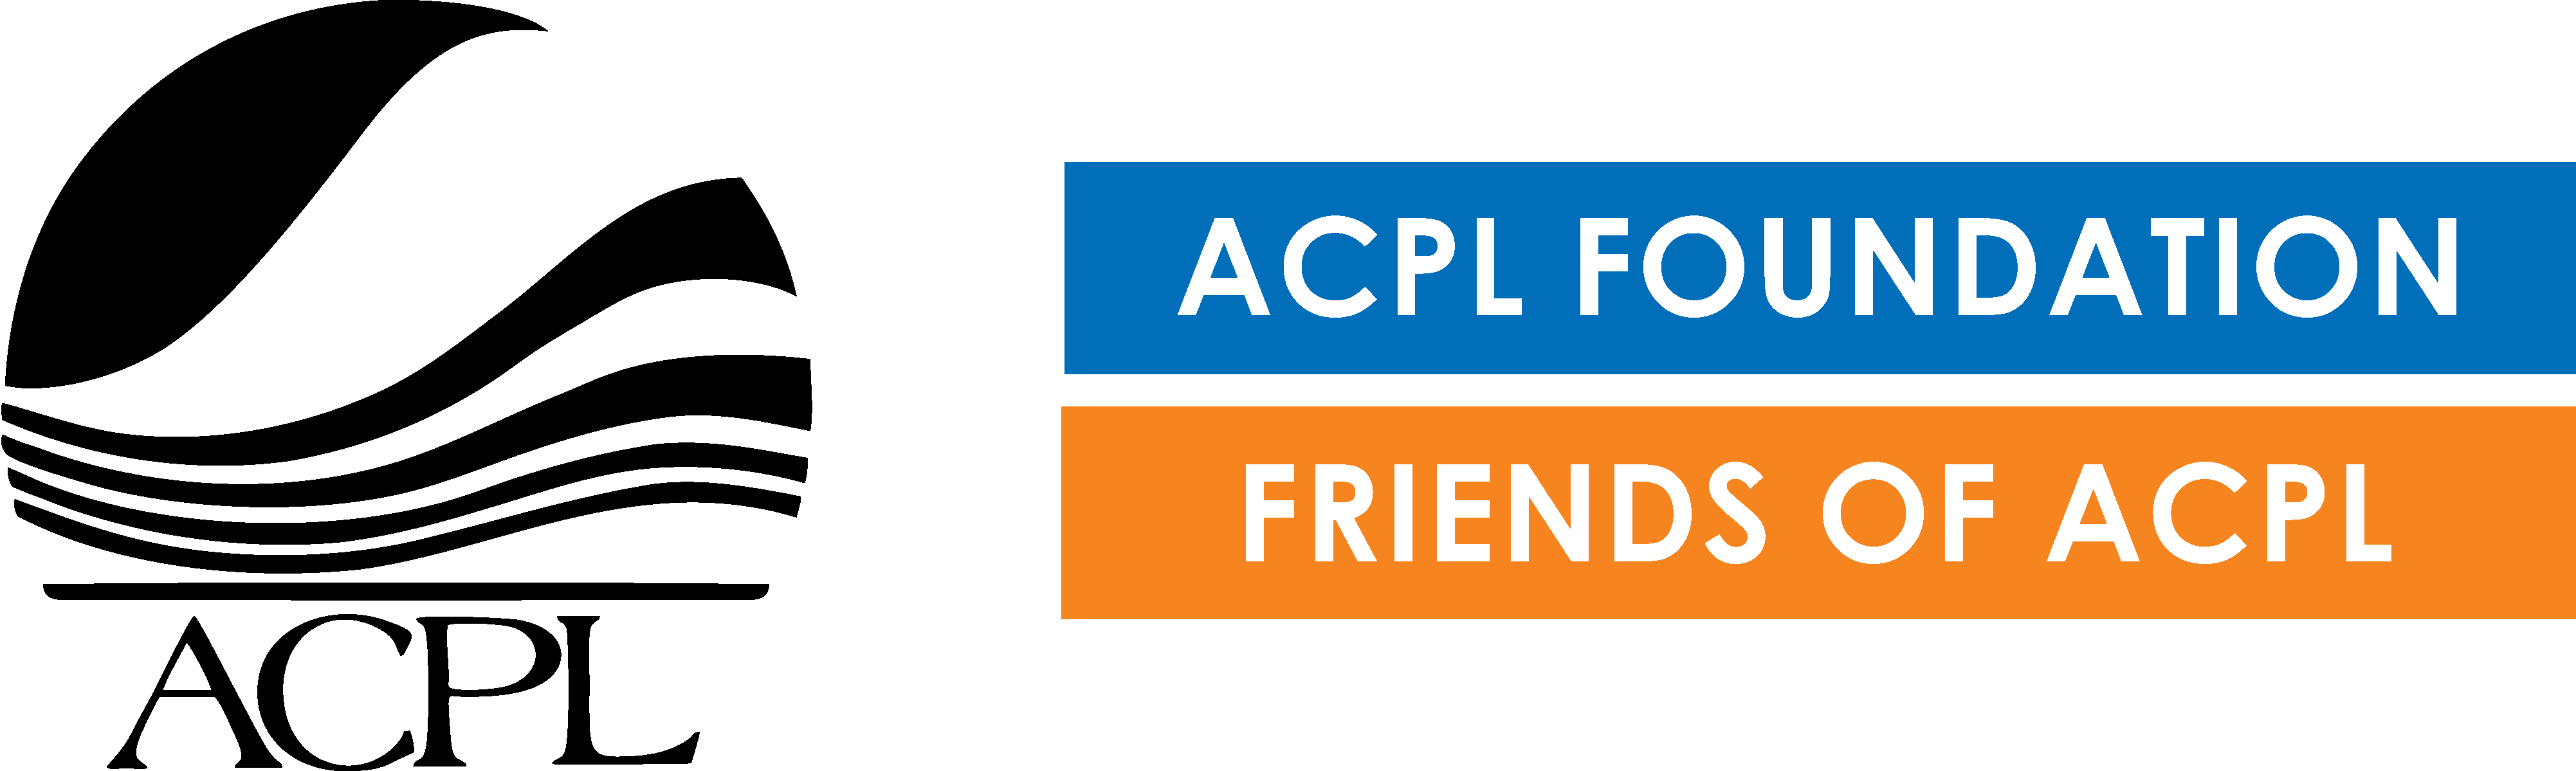 ACPL Friends & Foundation